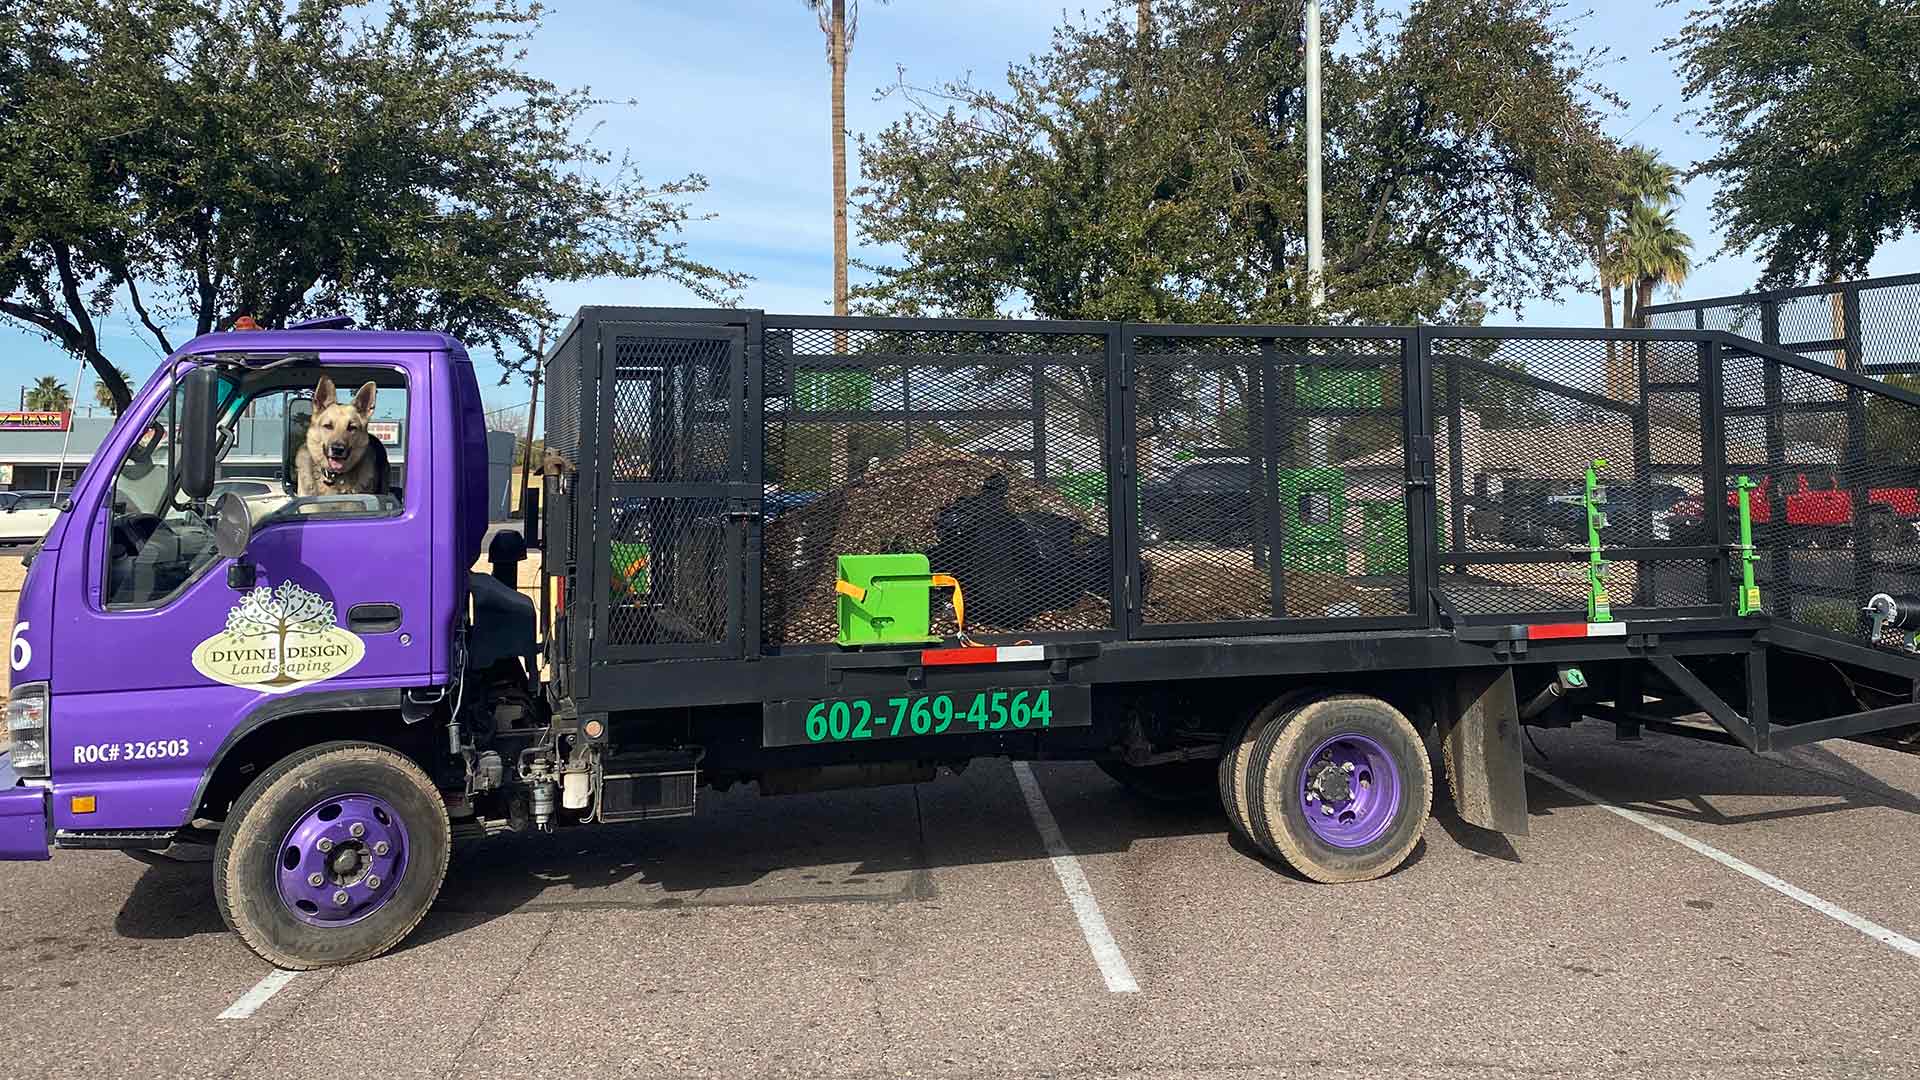 Work truck displayed with dog in Phoenix, AZ.